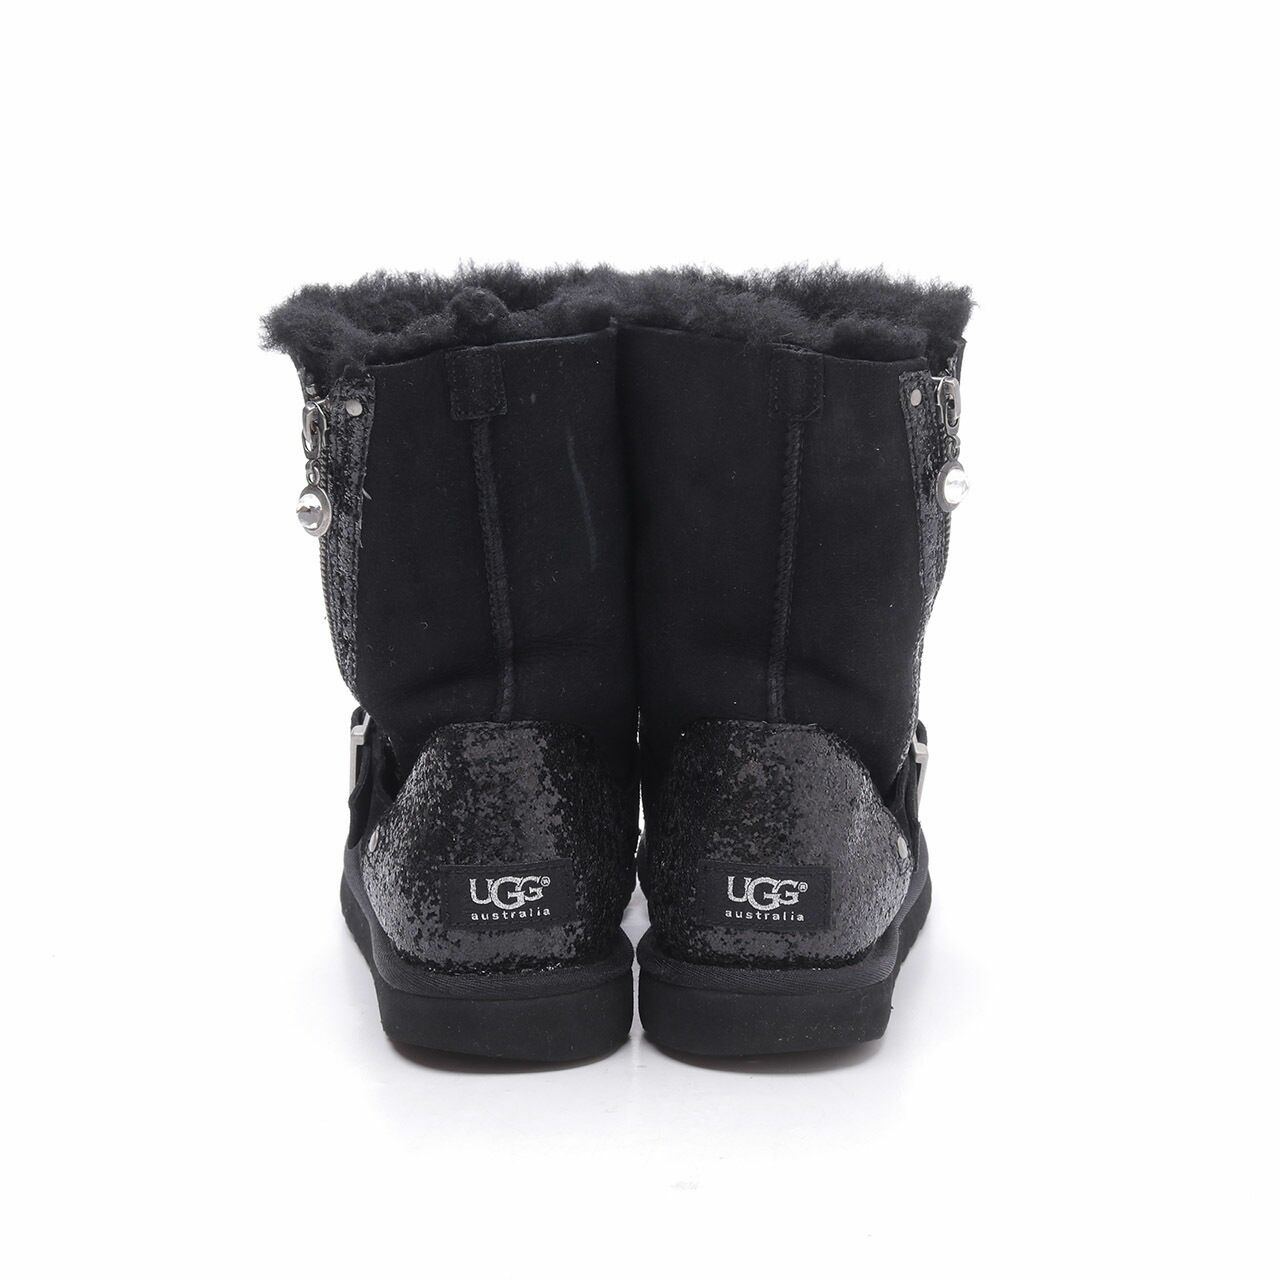 UGG Black Boots